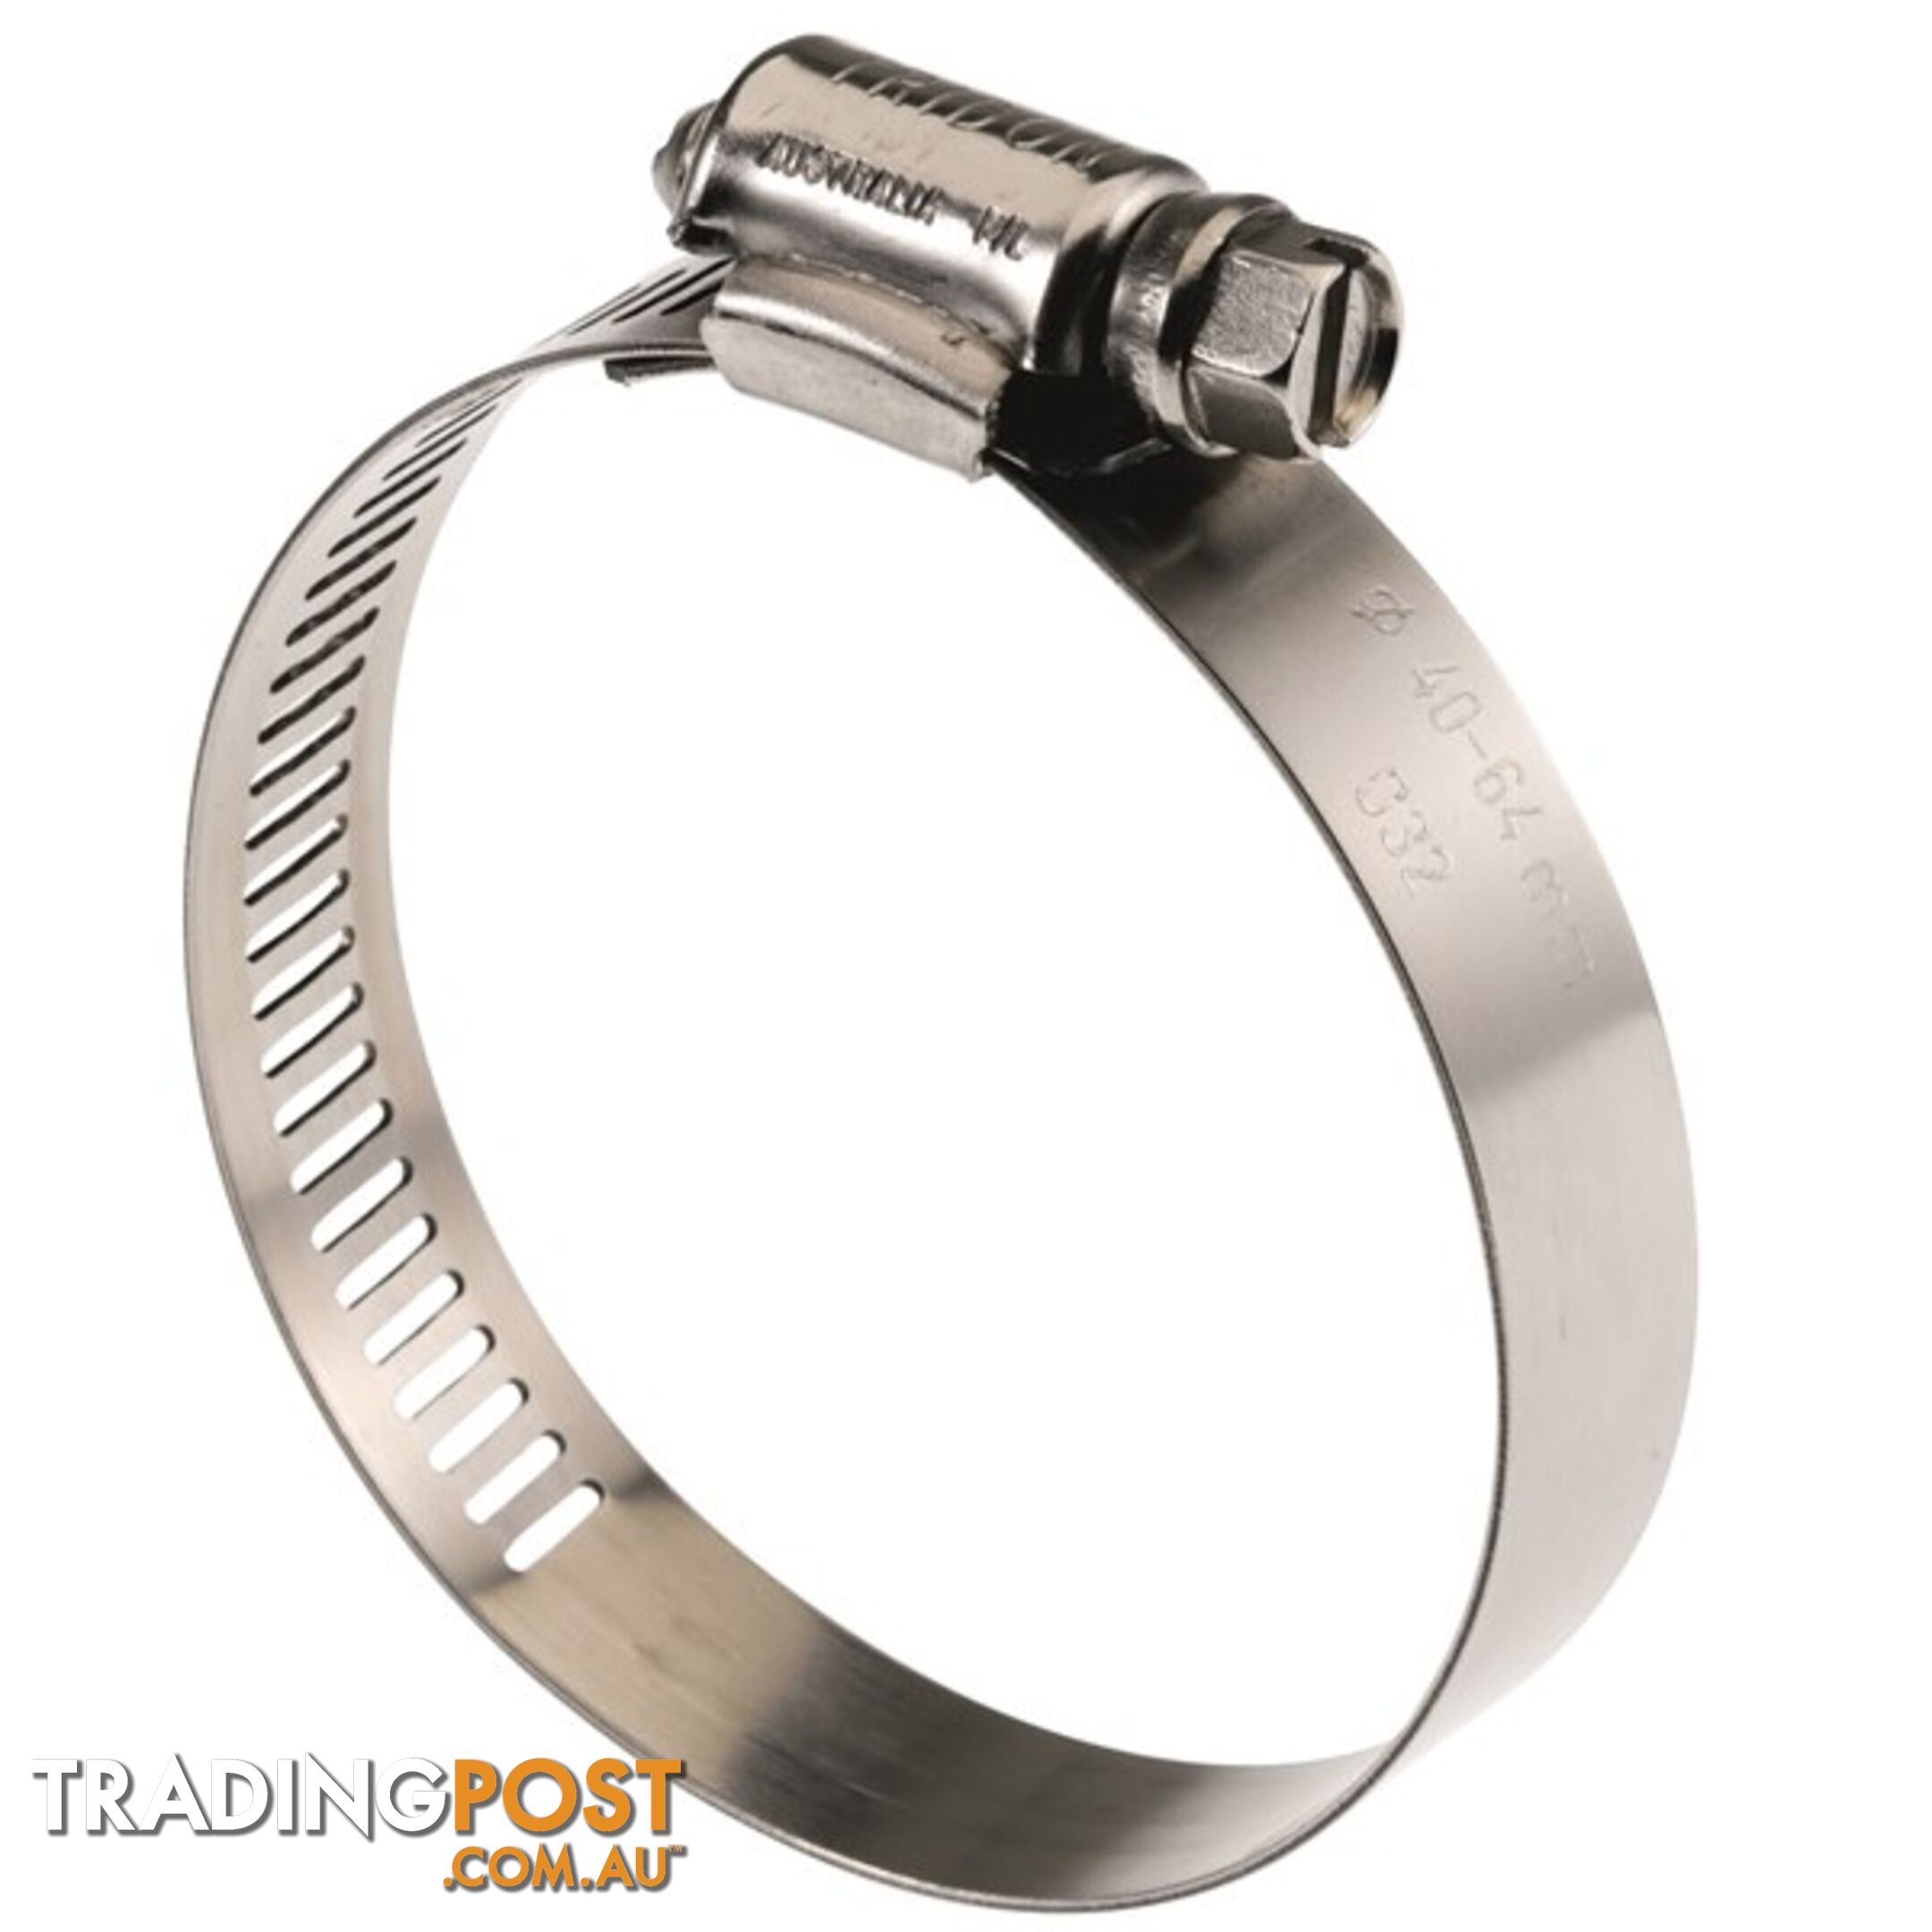 Tridon Full S. Steel Hose Clamps 27mm â 51mm Perforated Band 10pk SKU - HAS024P